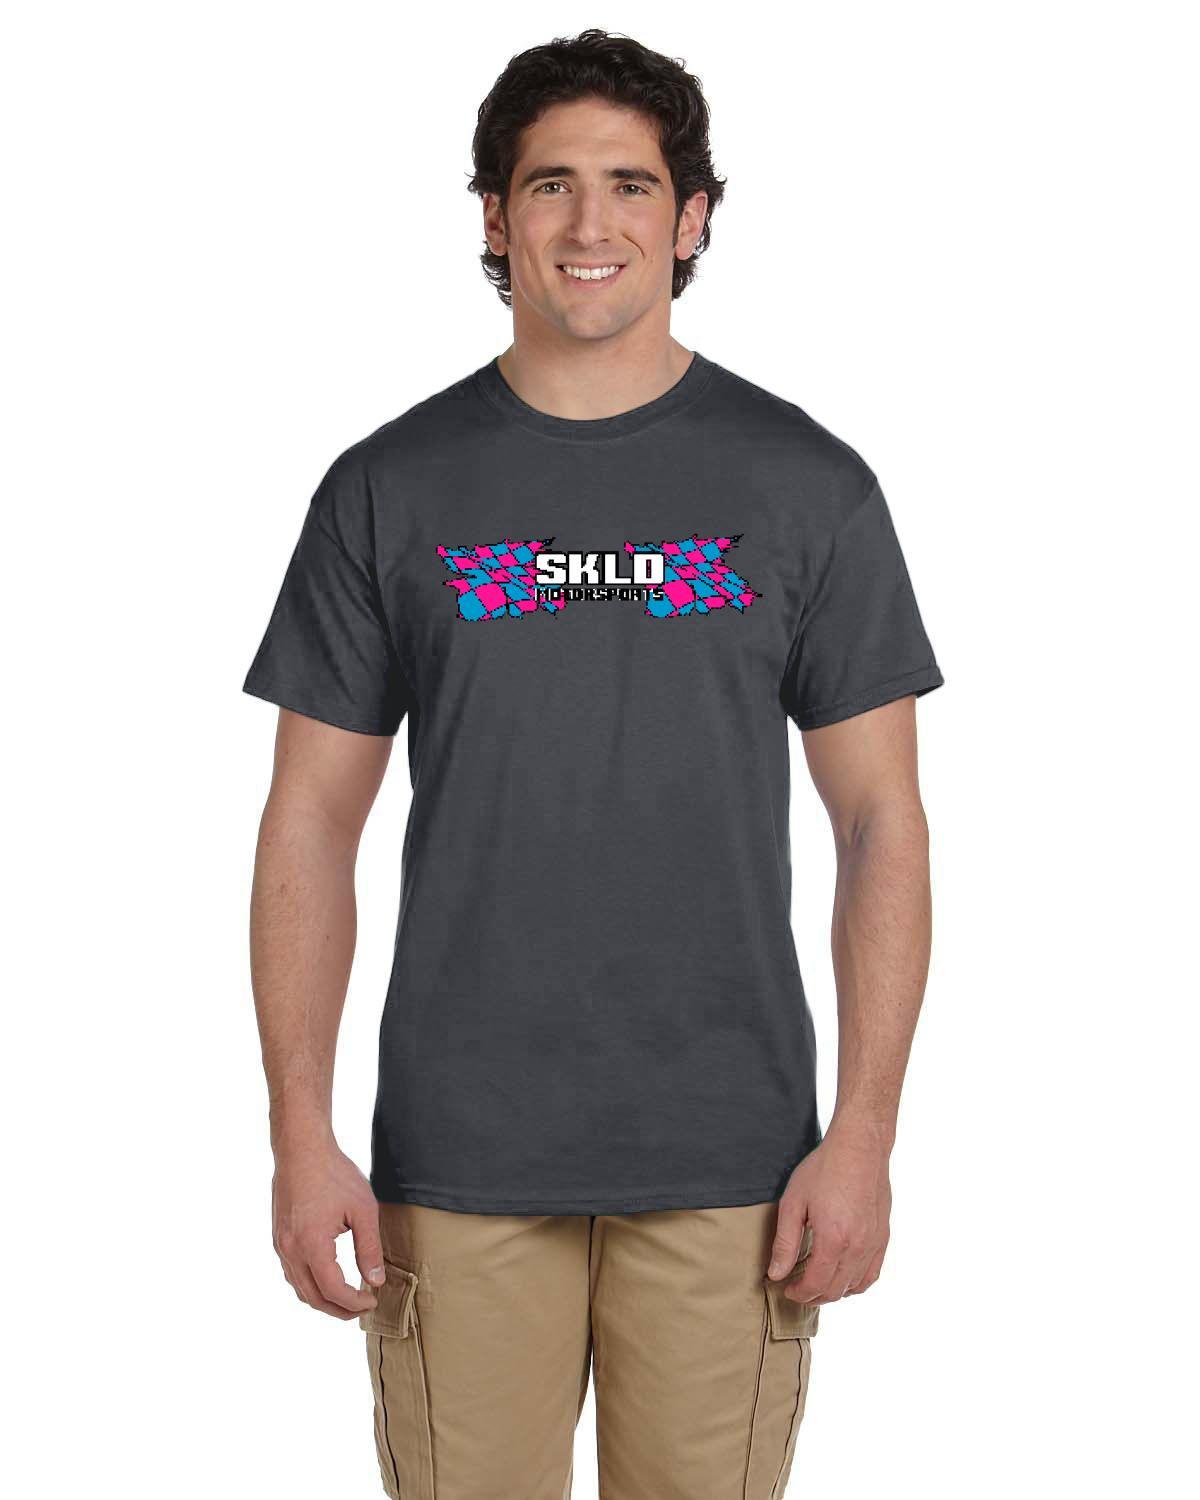 SKLD Motorsports Men's T-Shirt (S-XL)